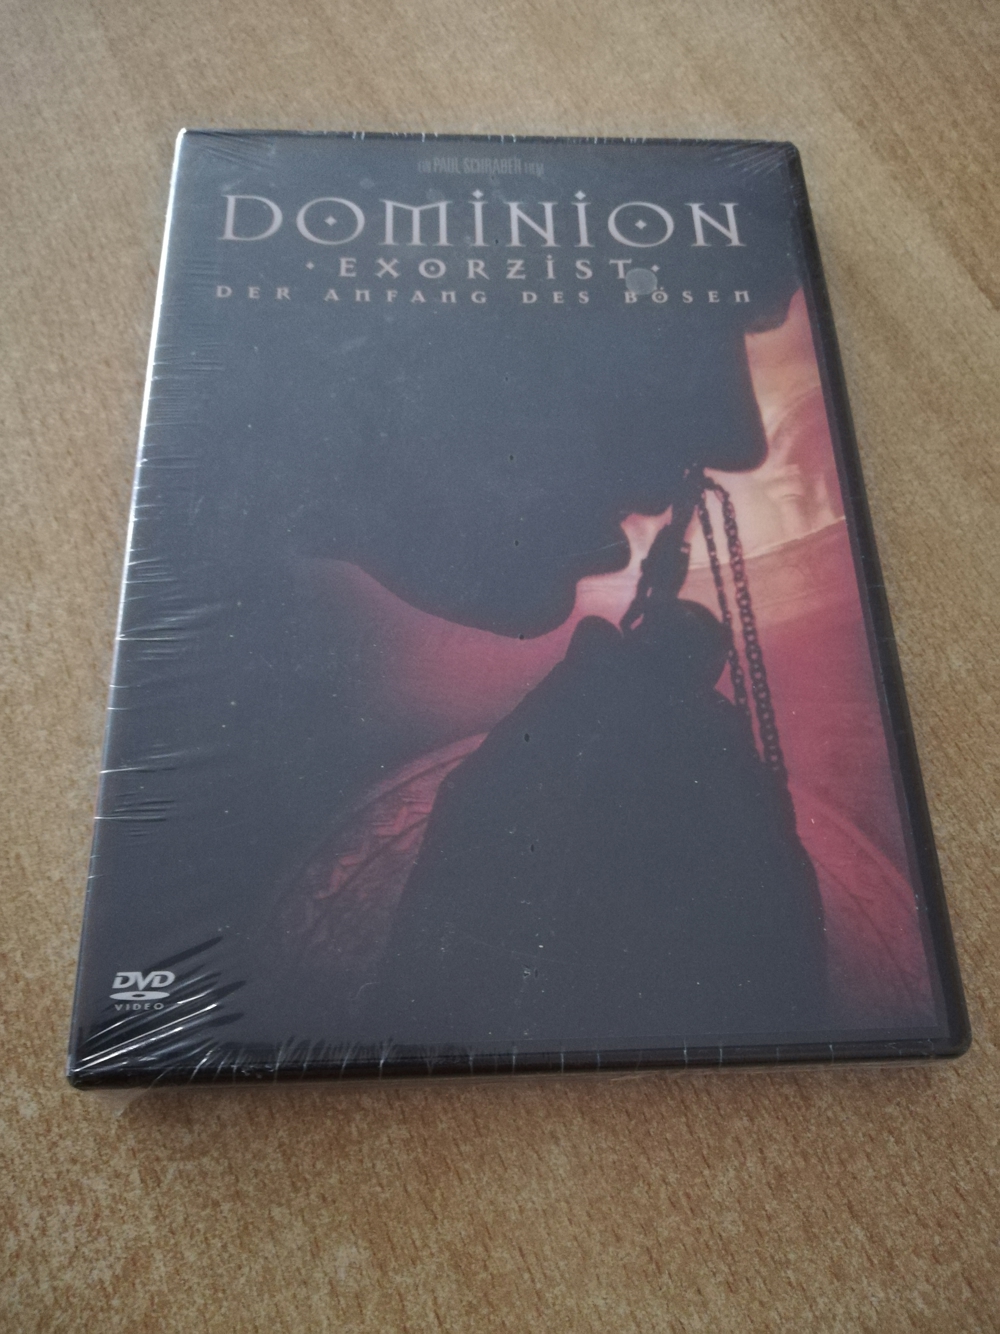 DVD "Dominion - Exorzist"